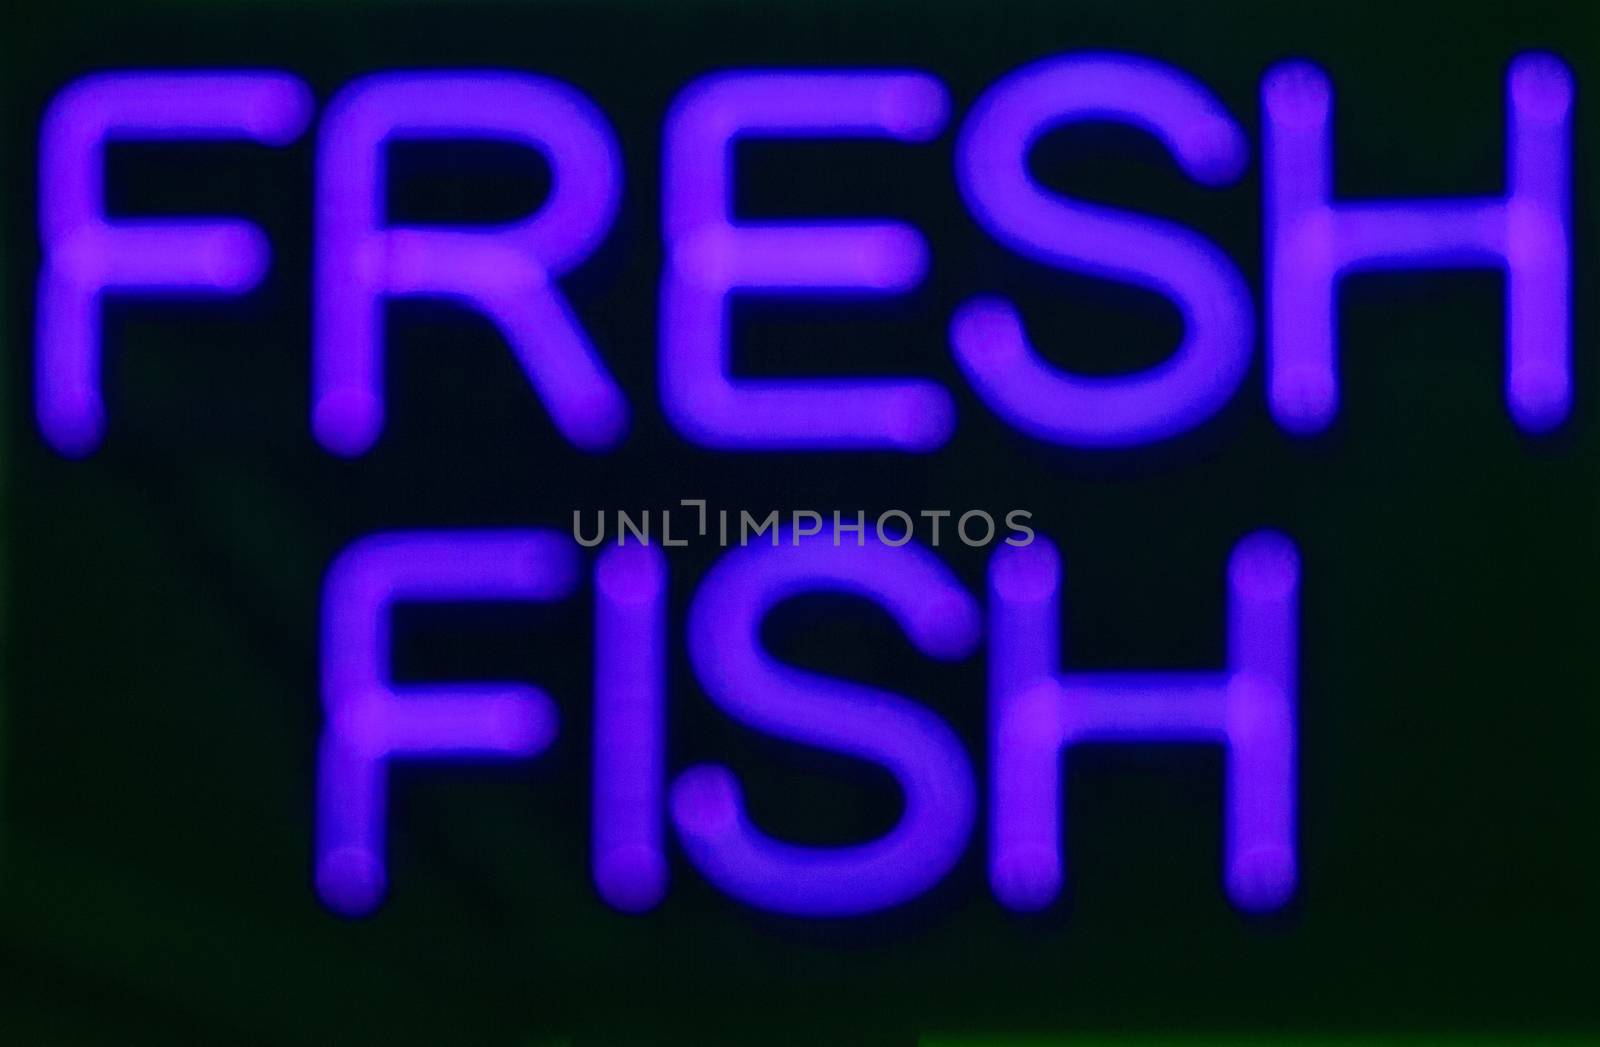 Fresh fish  neon sign at night in street photo.